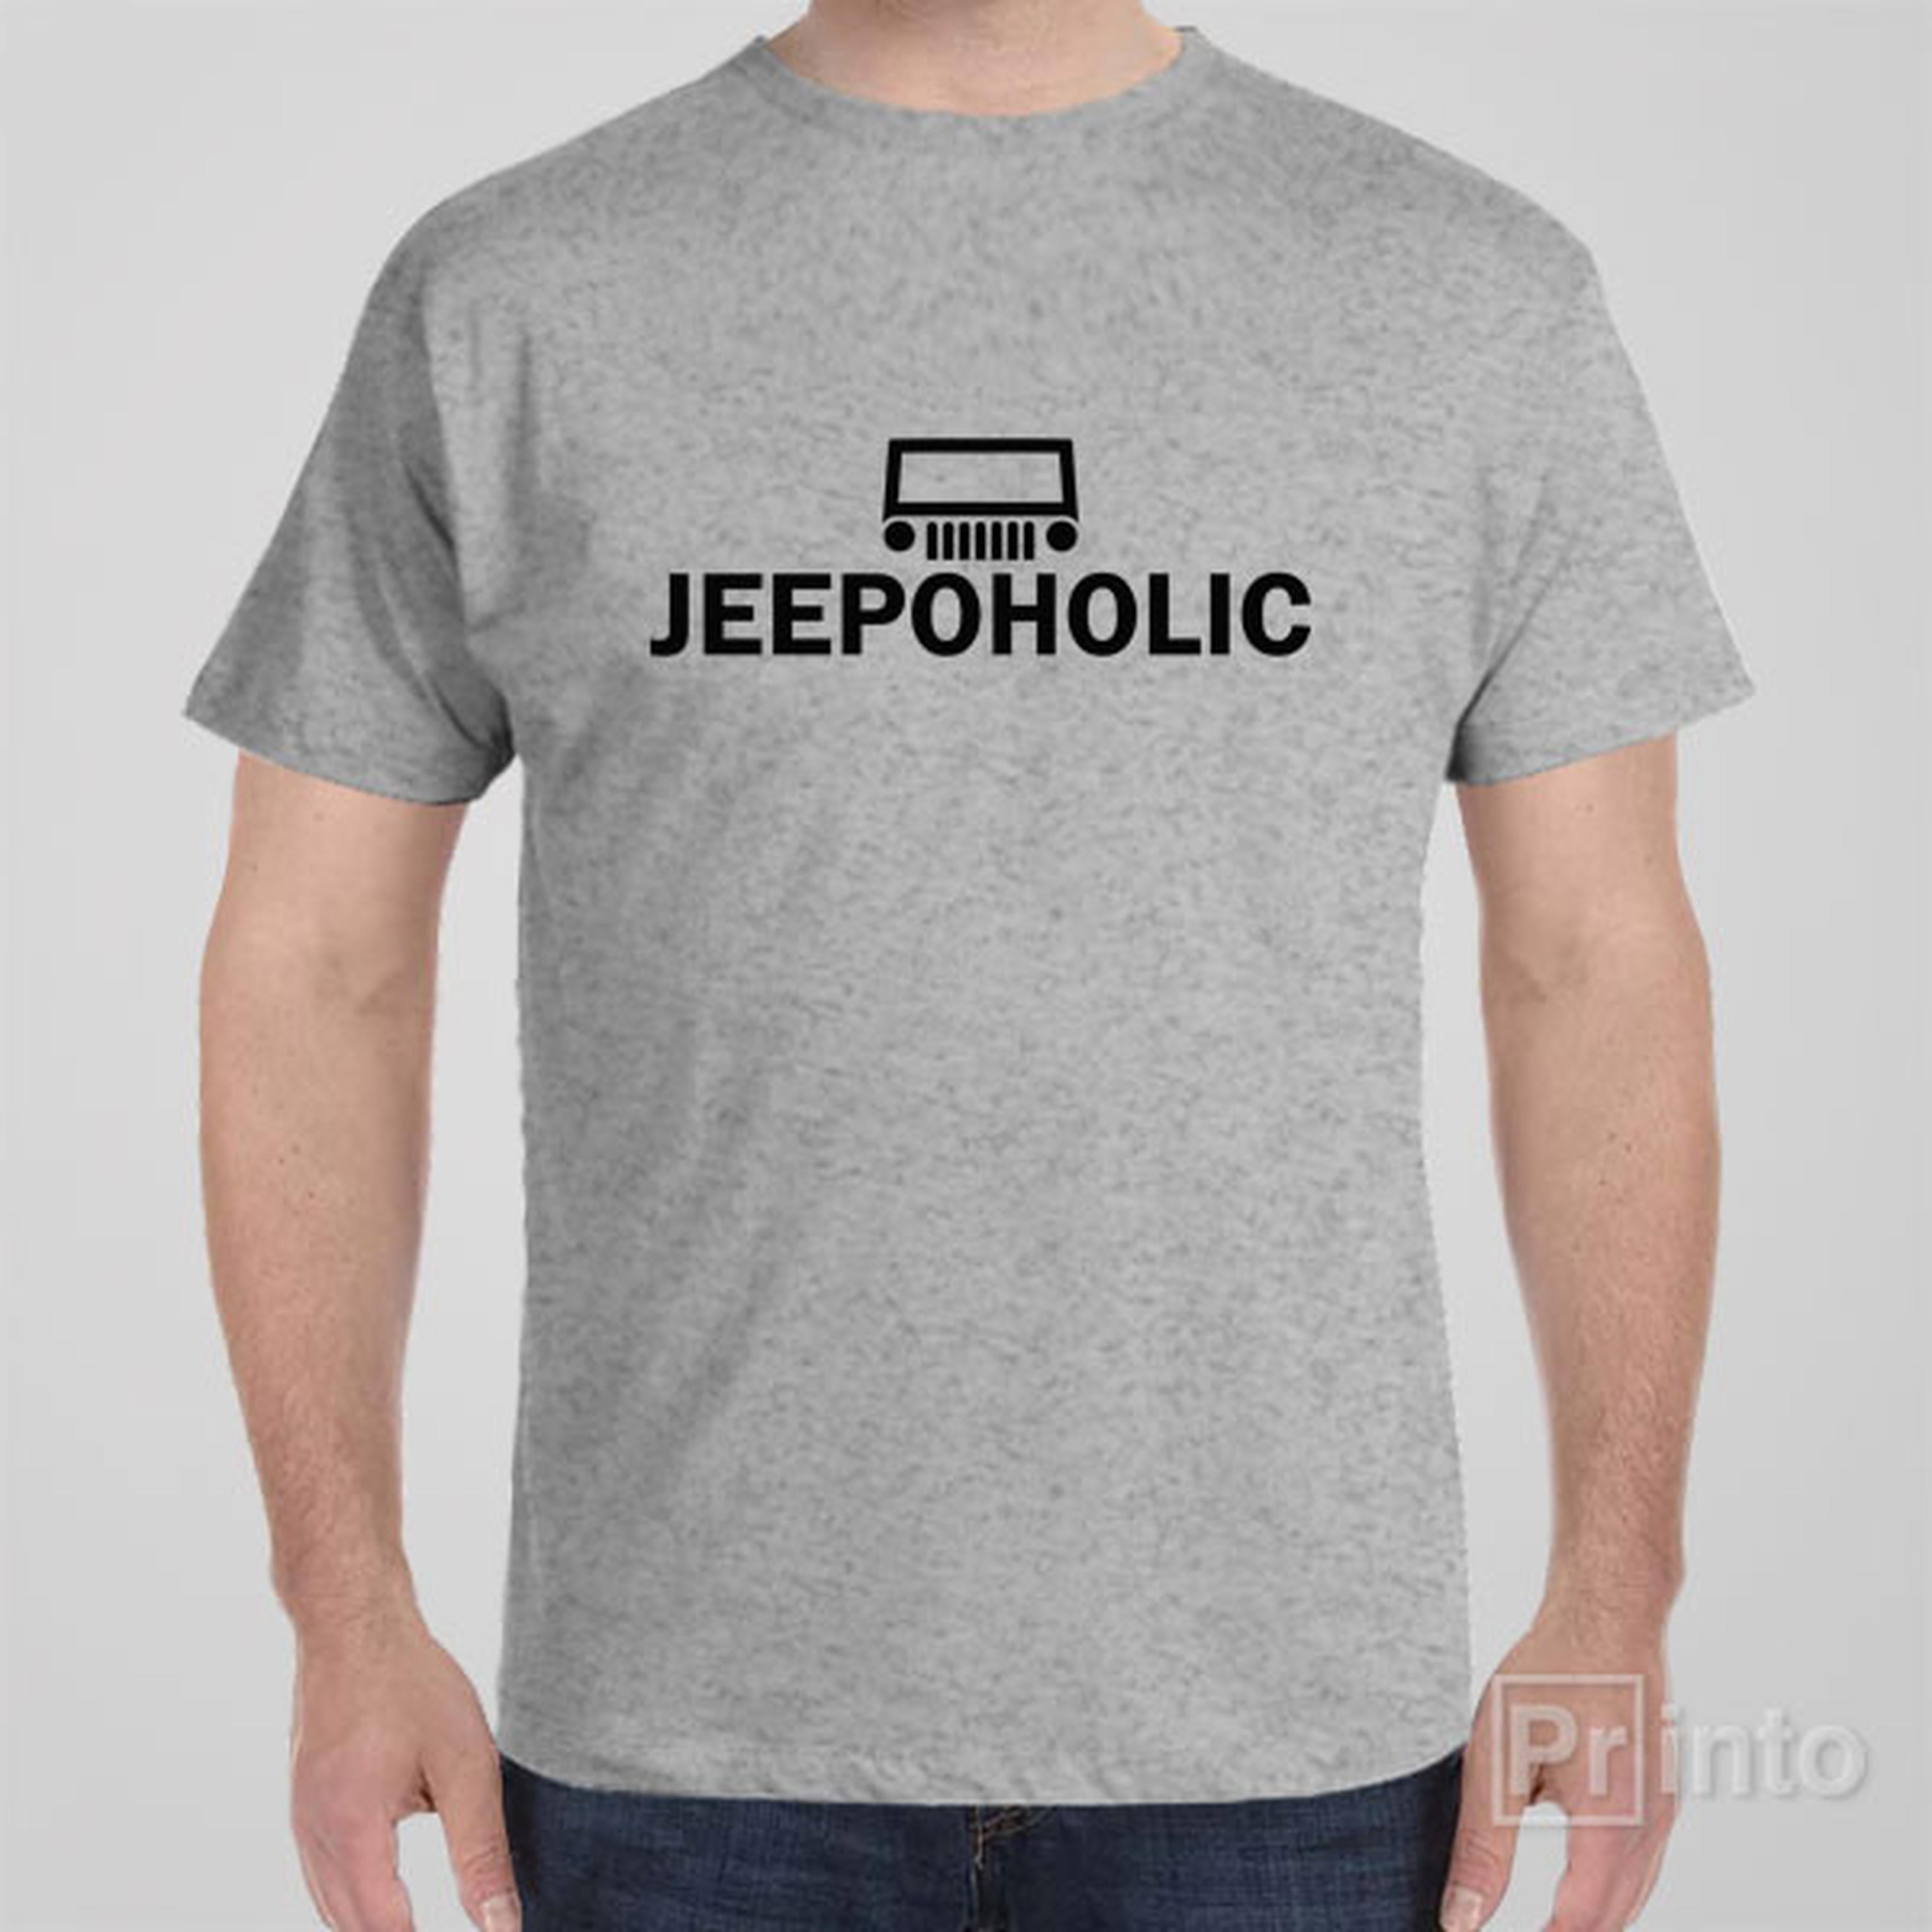 jeepoholic-t-shirt